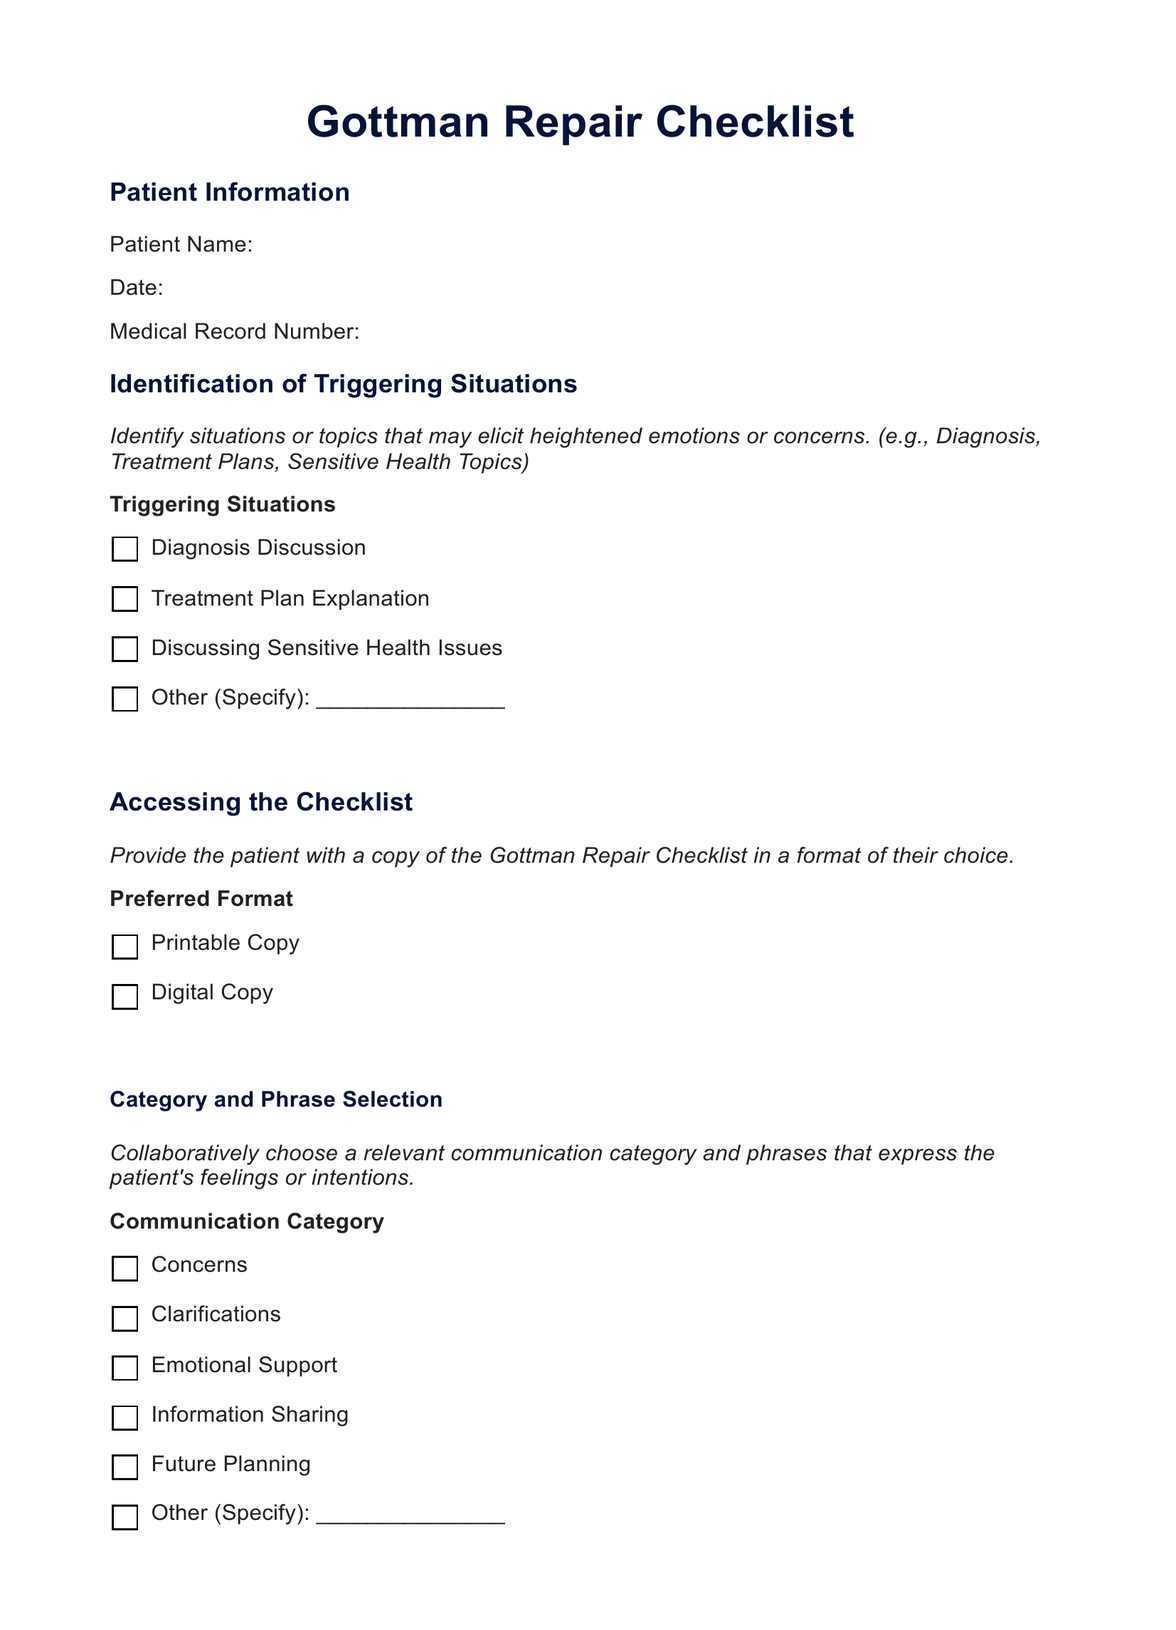 Gottman Repair Checklist PDF Example